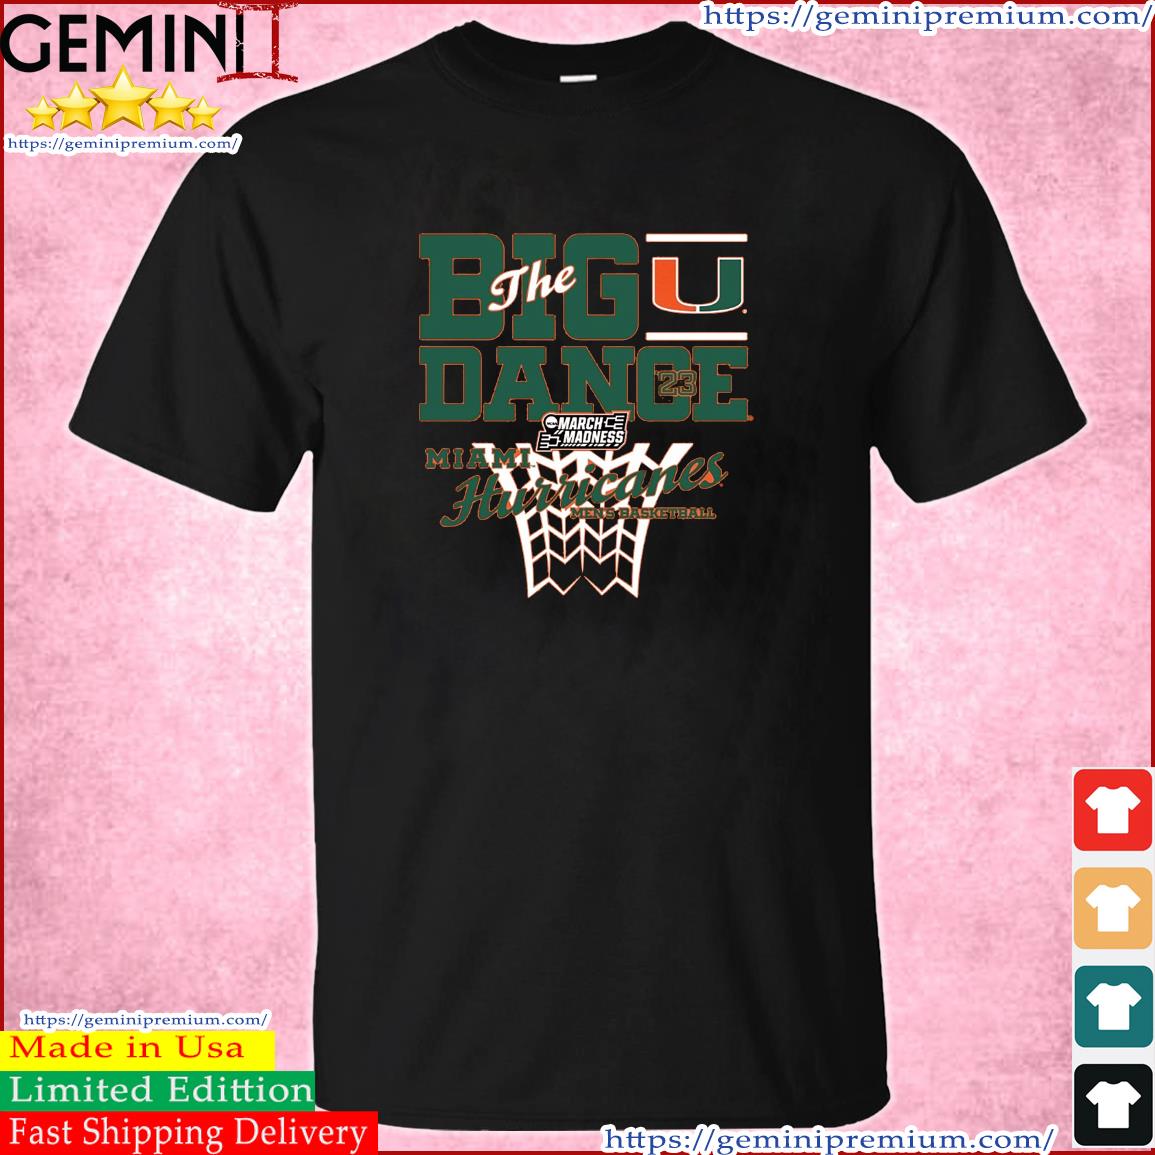 University of Miami Men's Basketball 2023 NCAA March Madness Tournament Bound Shirt